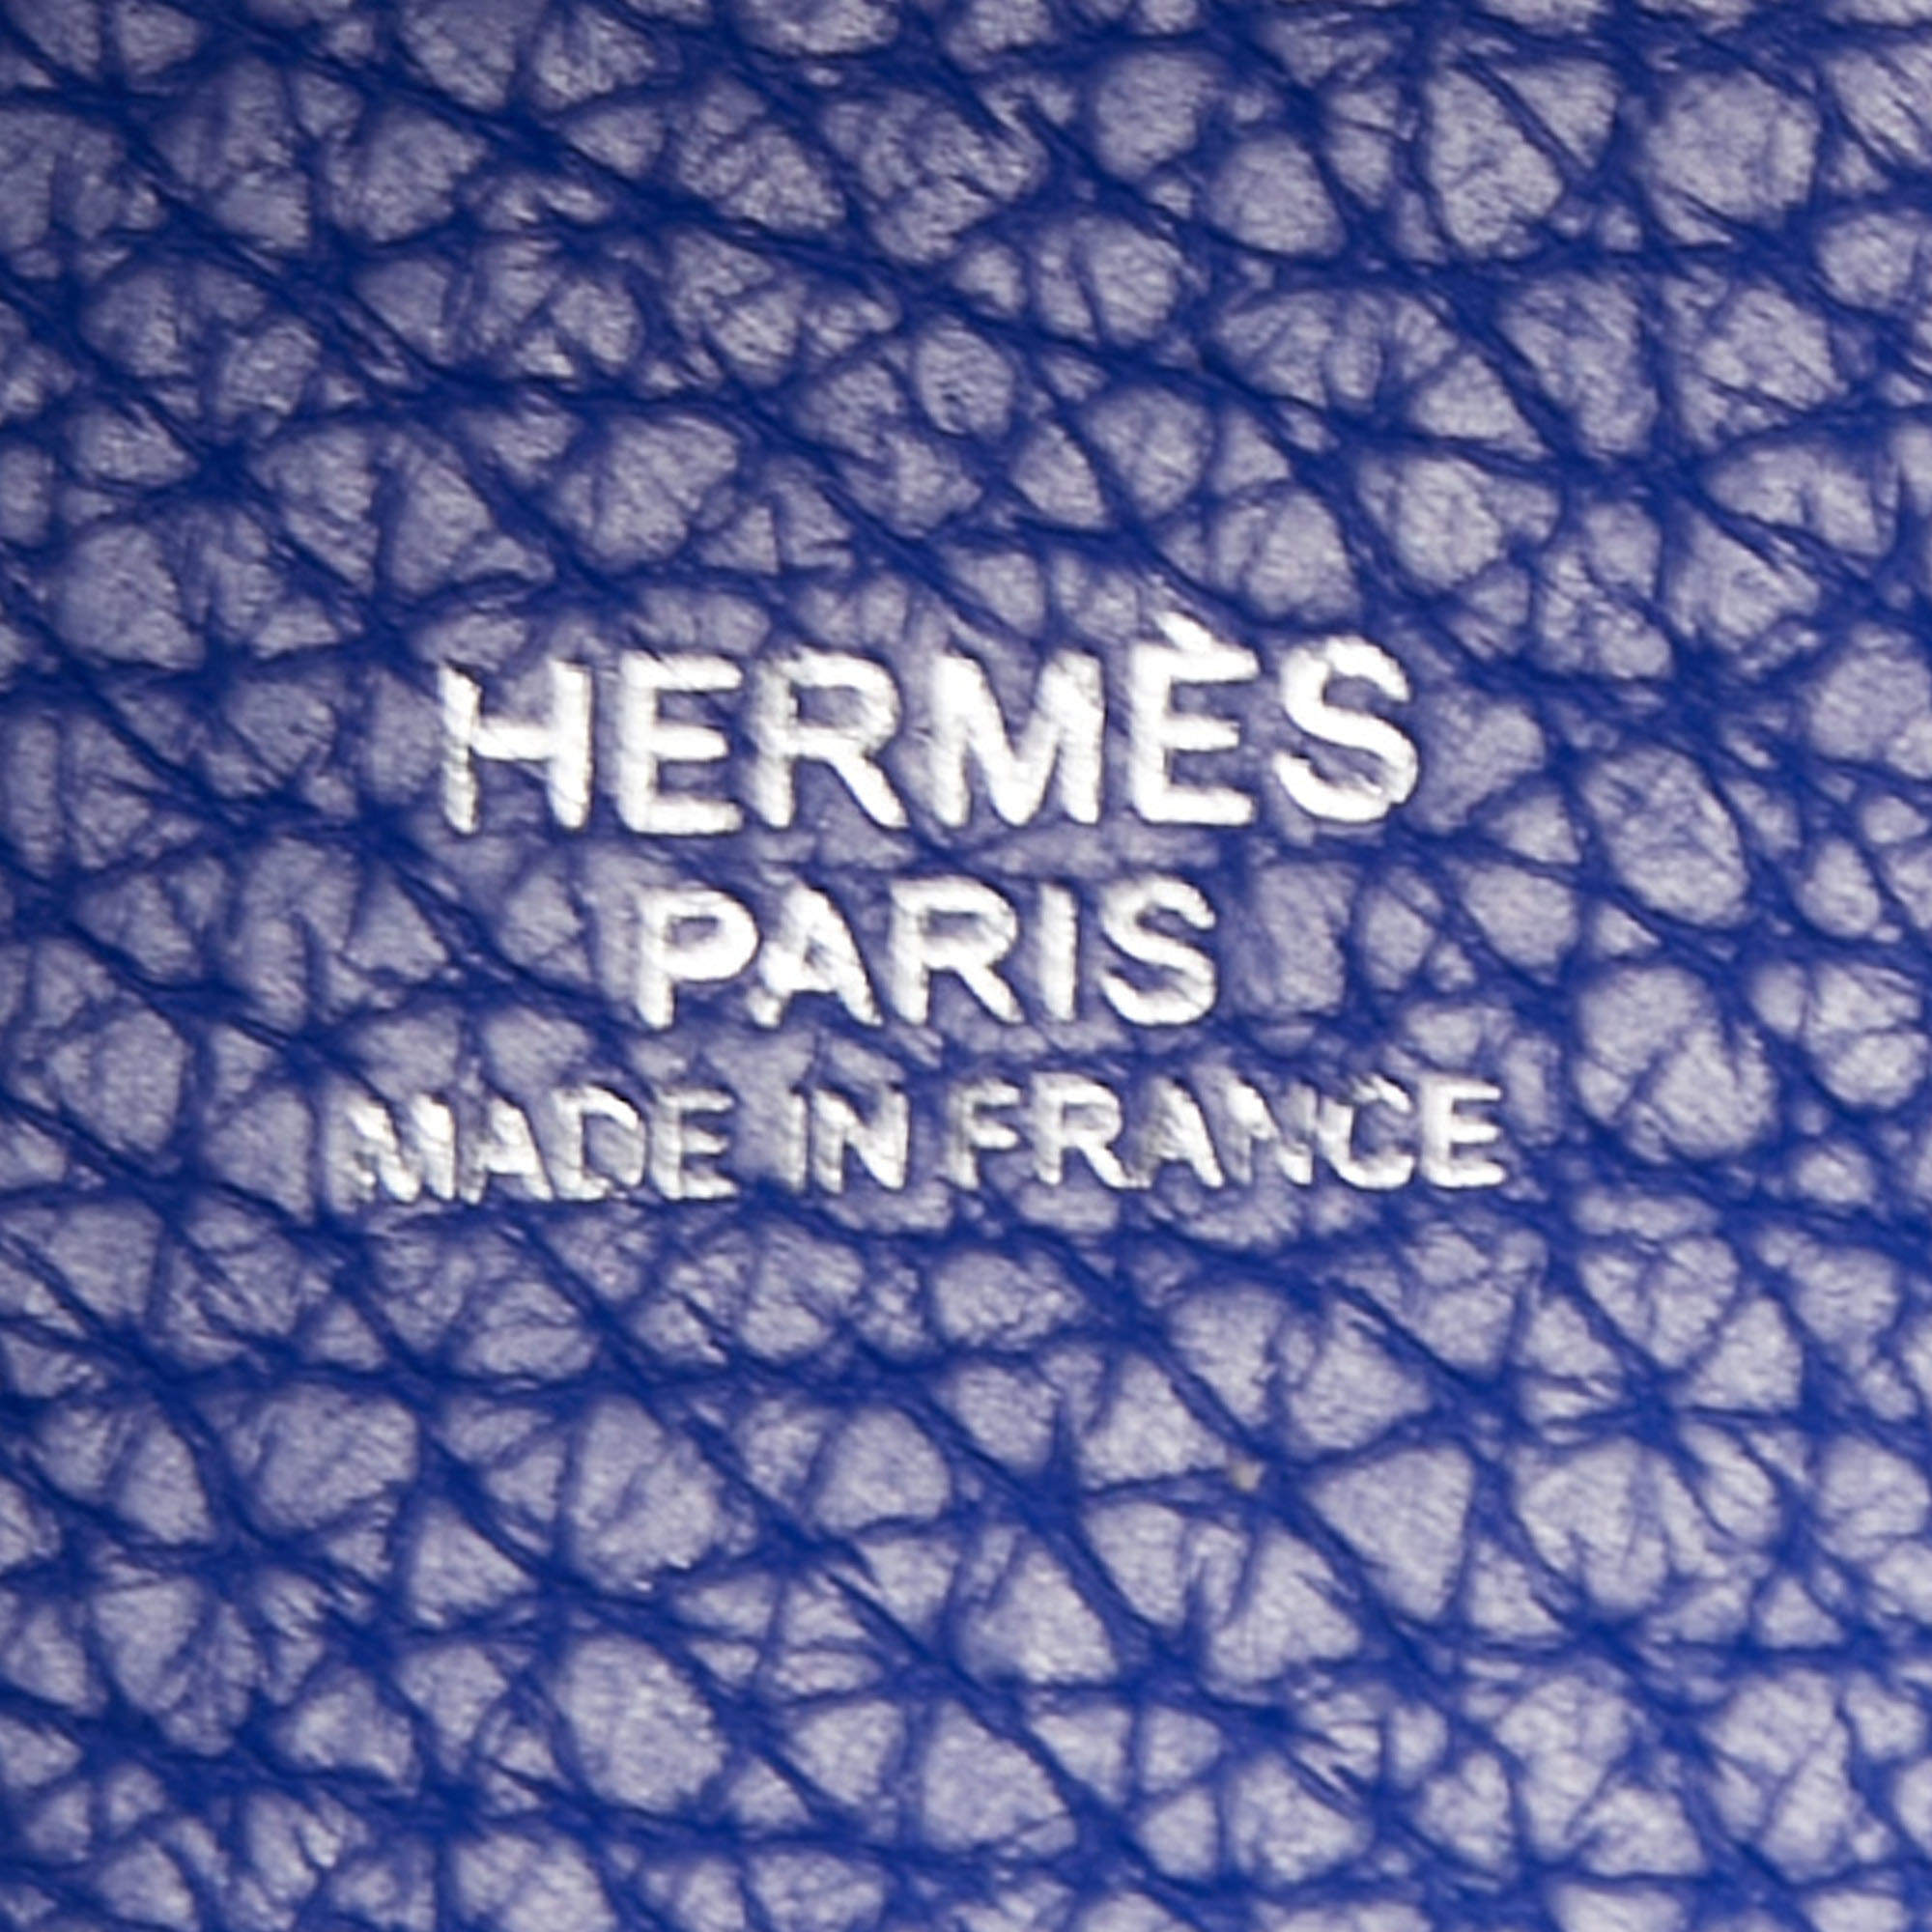 Hermes Bleu Electrique Taurillon Clemence Leather Picotin Lock PM Bag Hermes